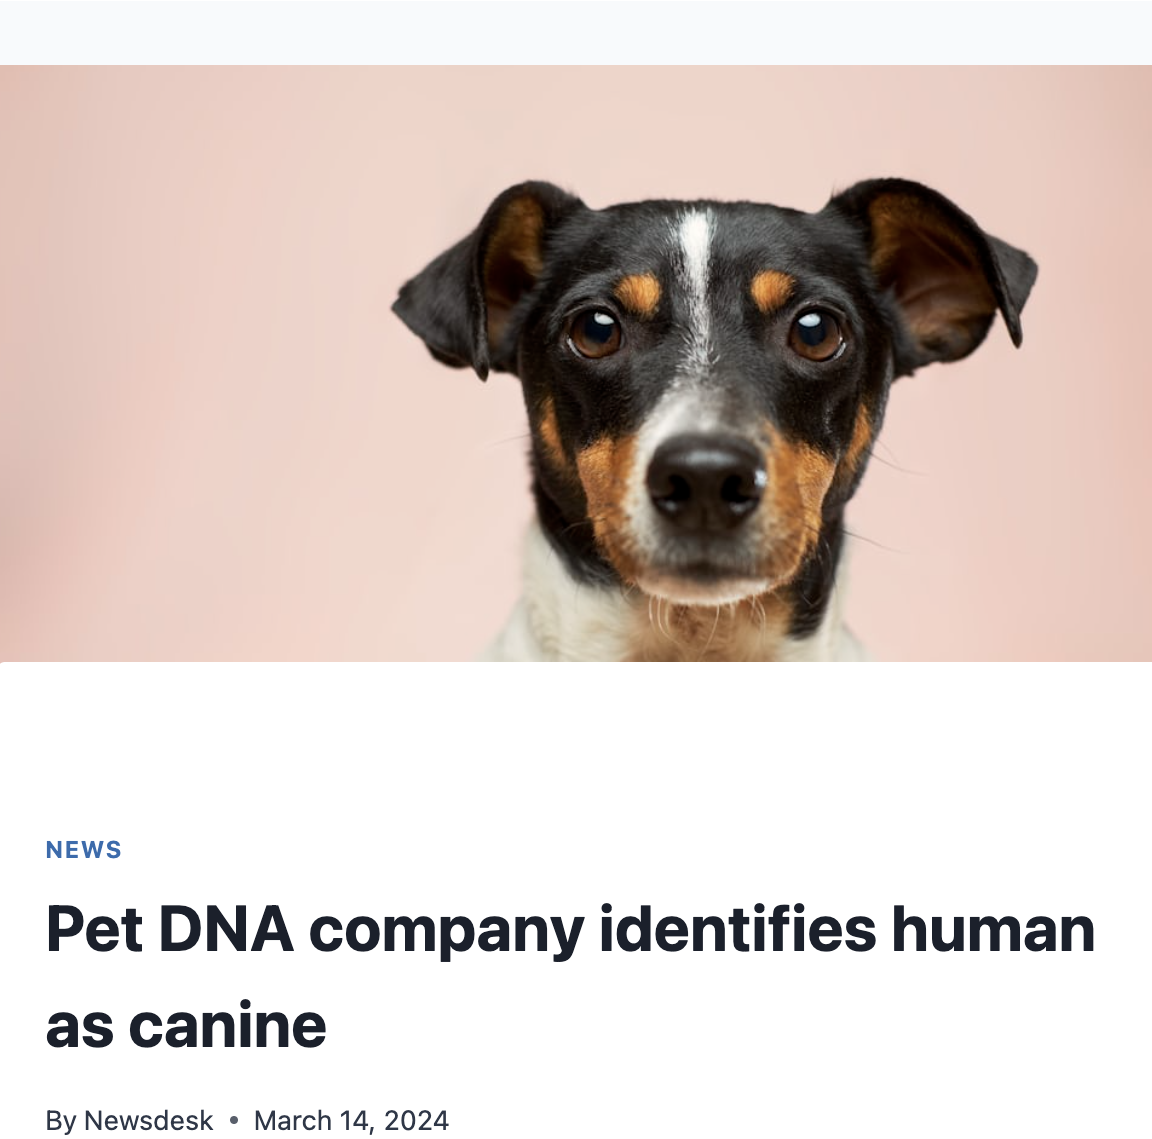 dog hd - News Pet Dna company identifies human as canine By Newsdesk